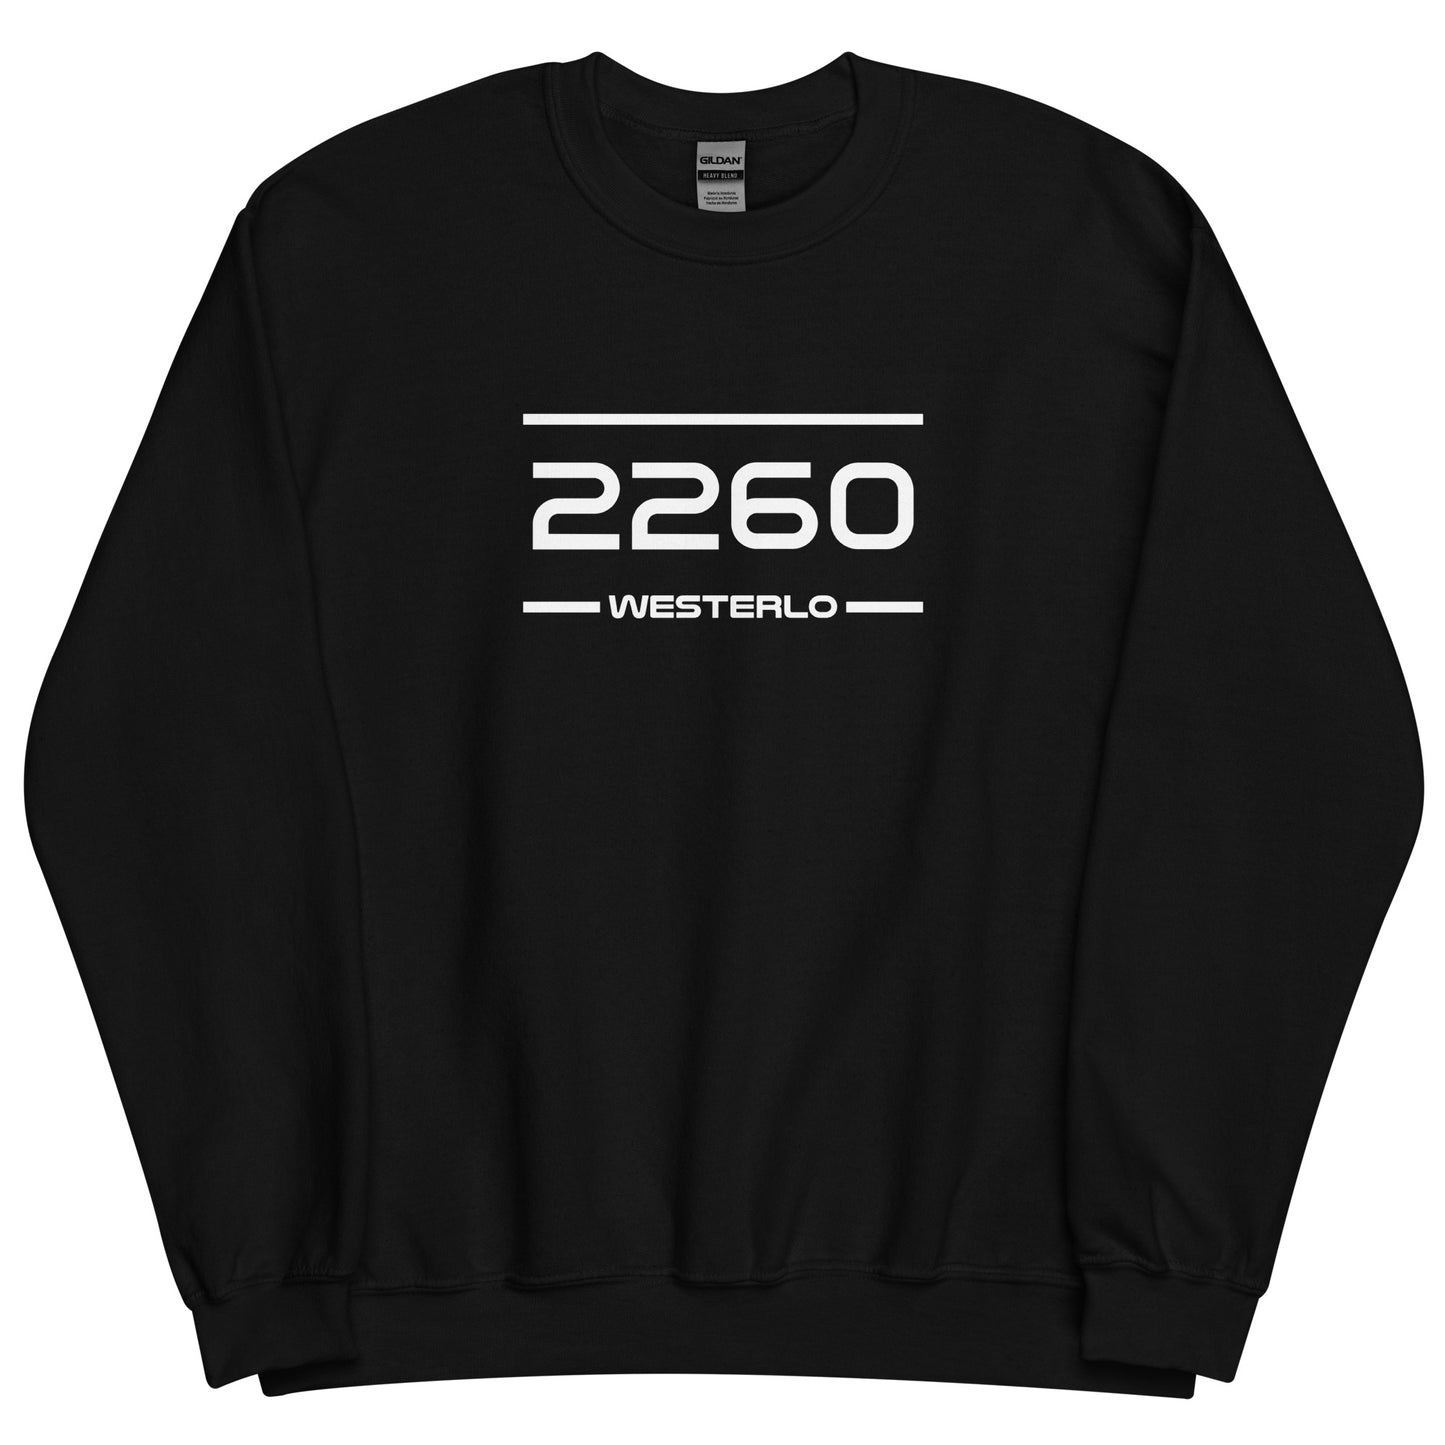 Sweater - 2260 - Westerlo (M/V)